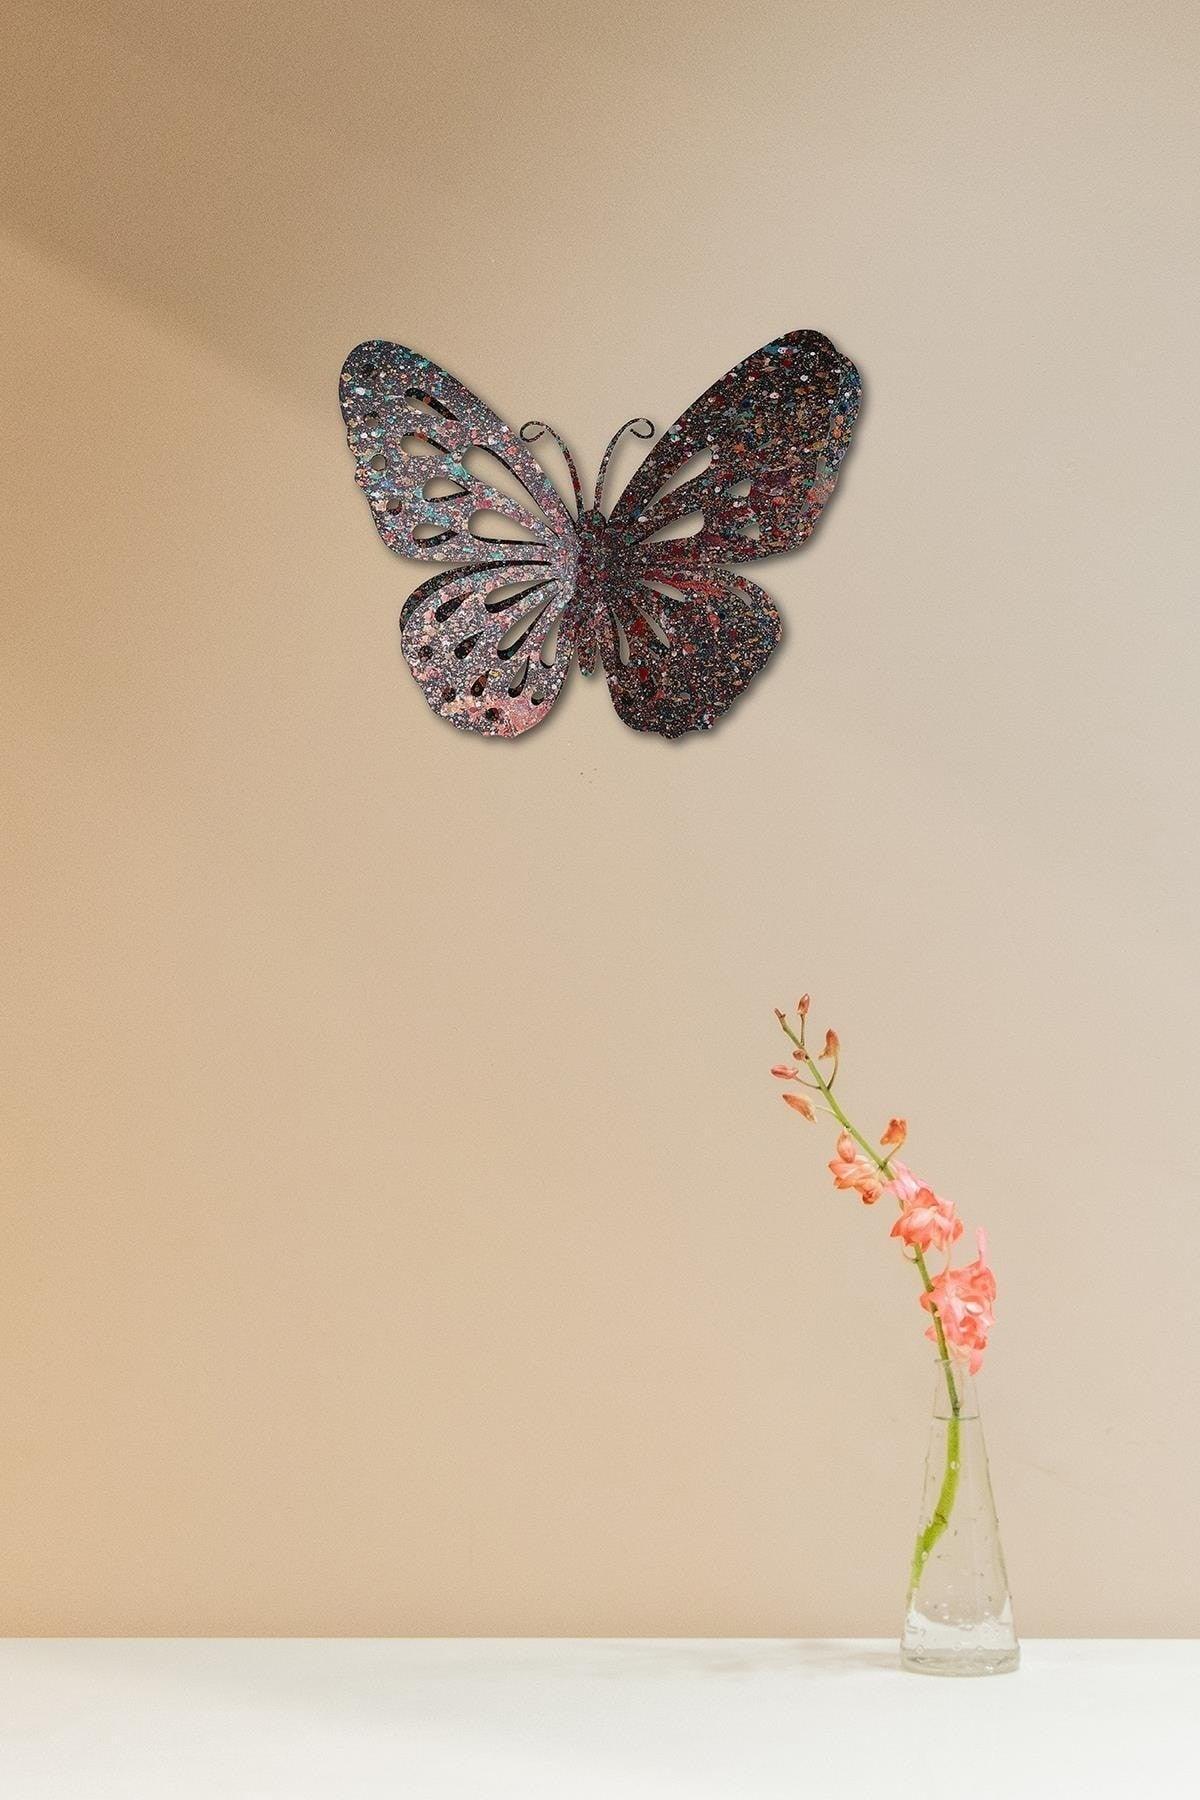 Doreart Black Butterfly Metal Wall Painting , Home Office Wall Board - Swordslife